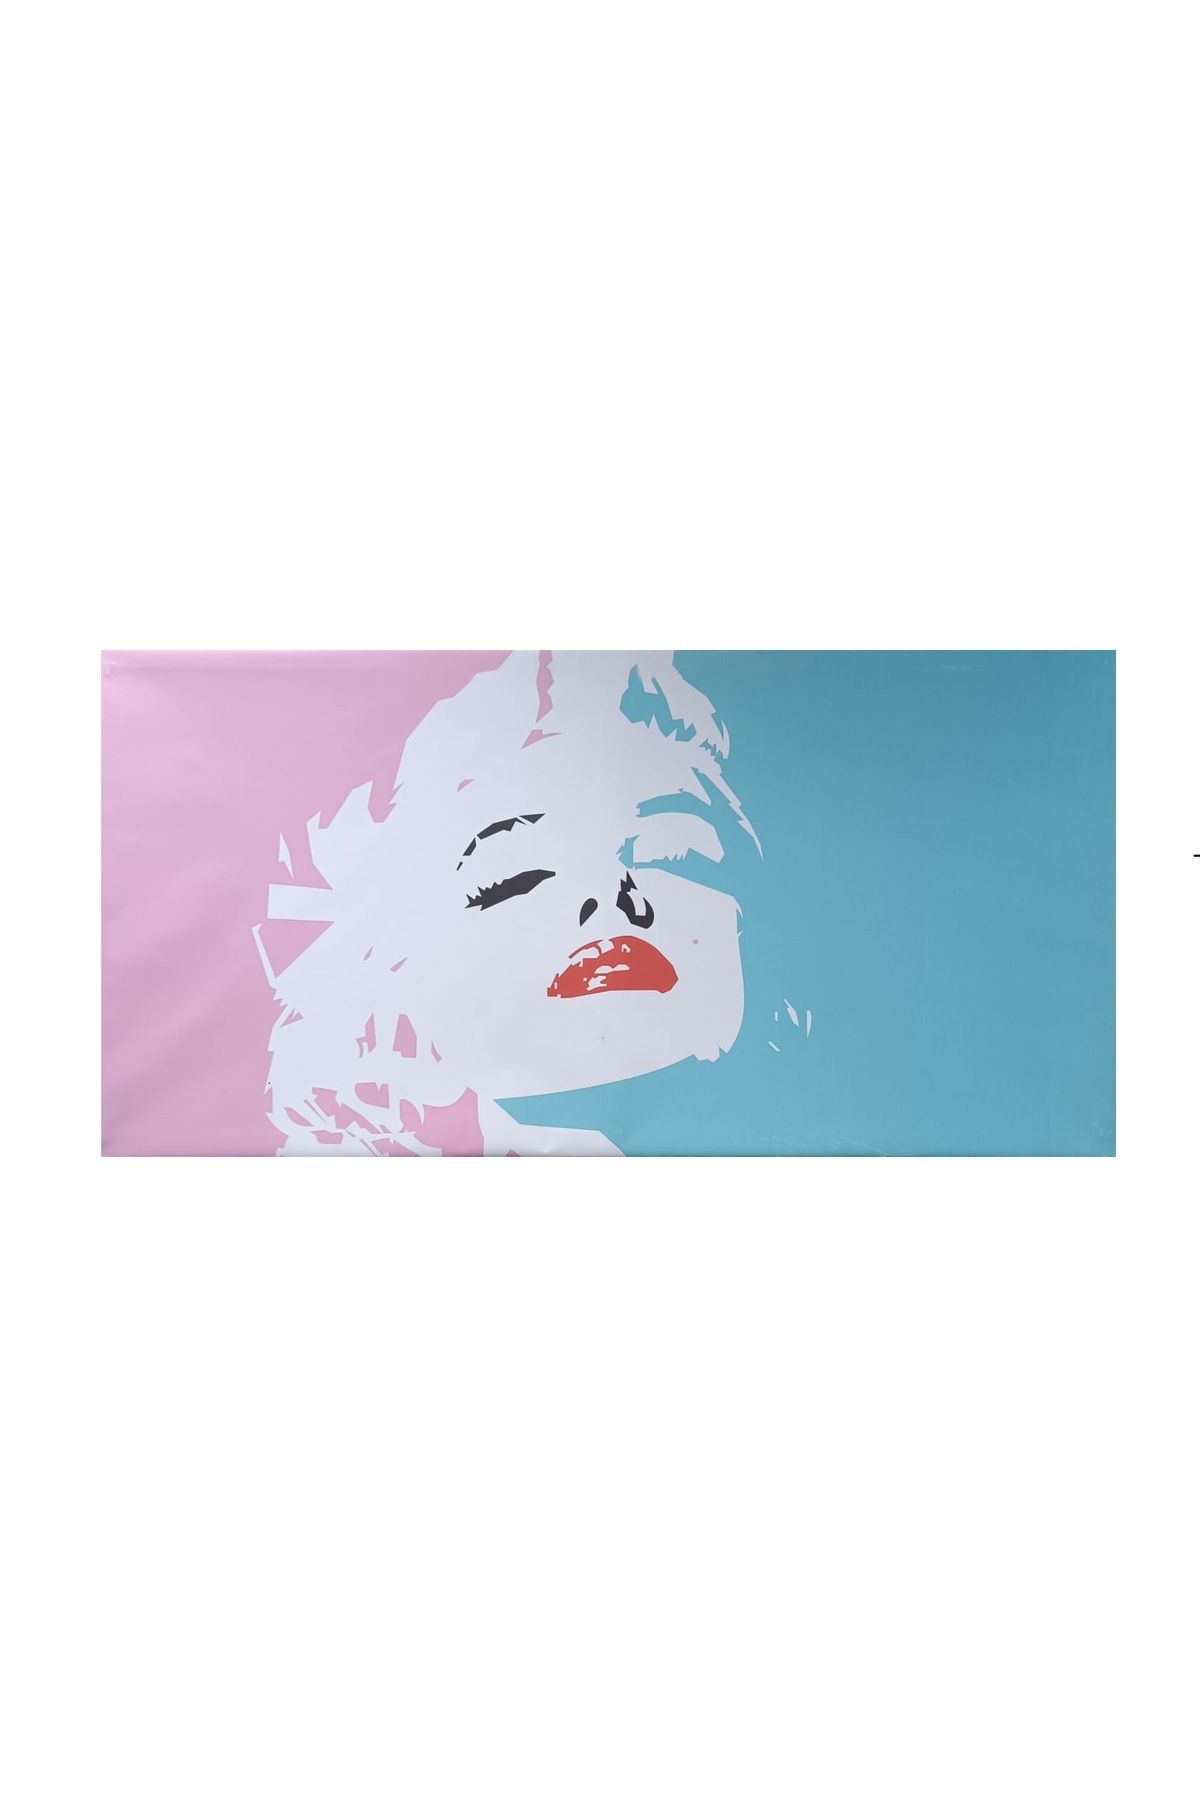 emozza Marilyn Monroe Poster Tablosu